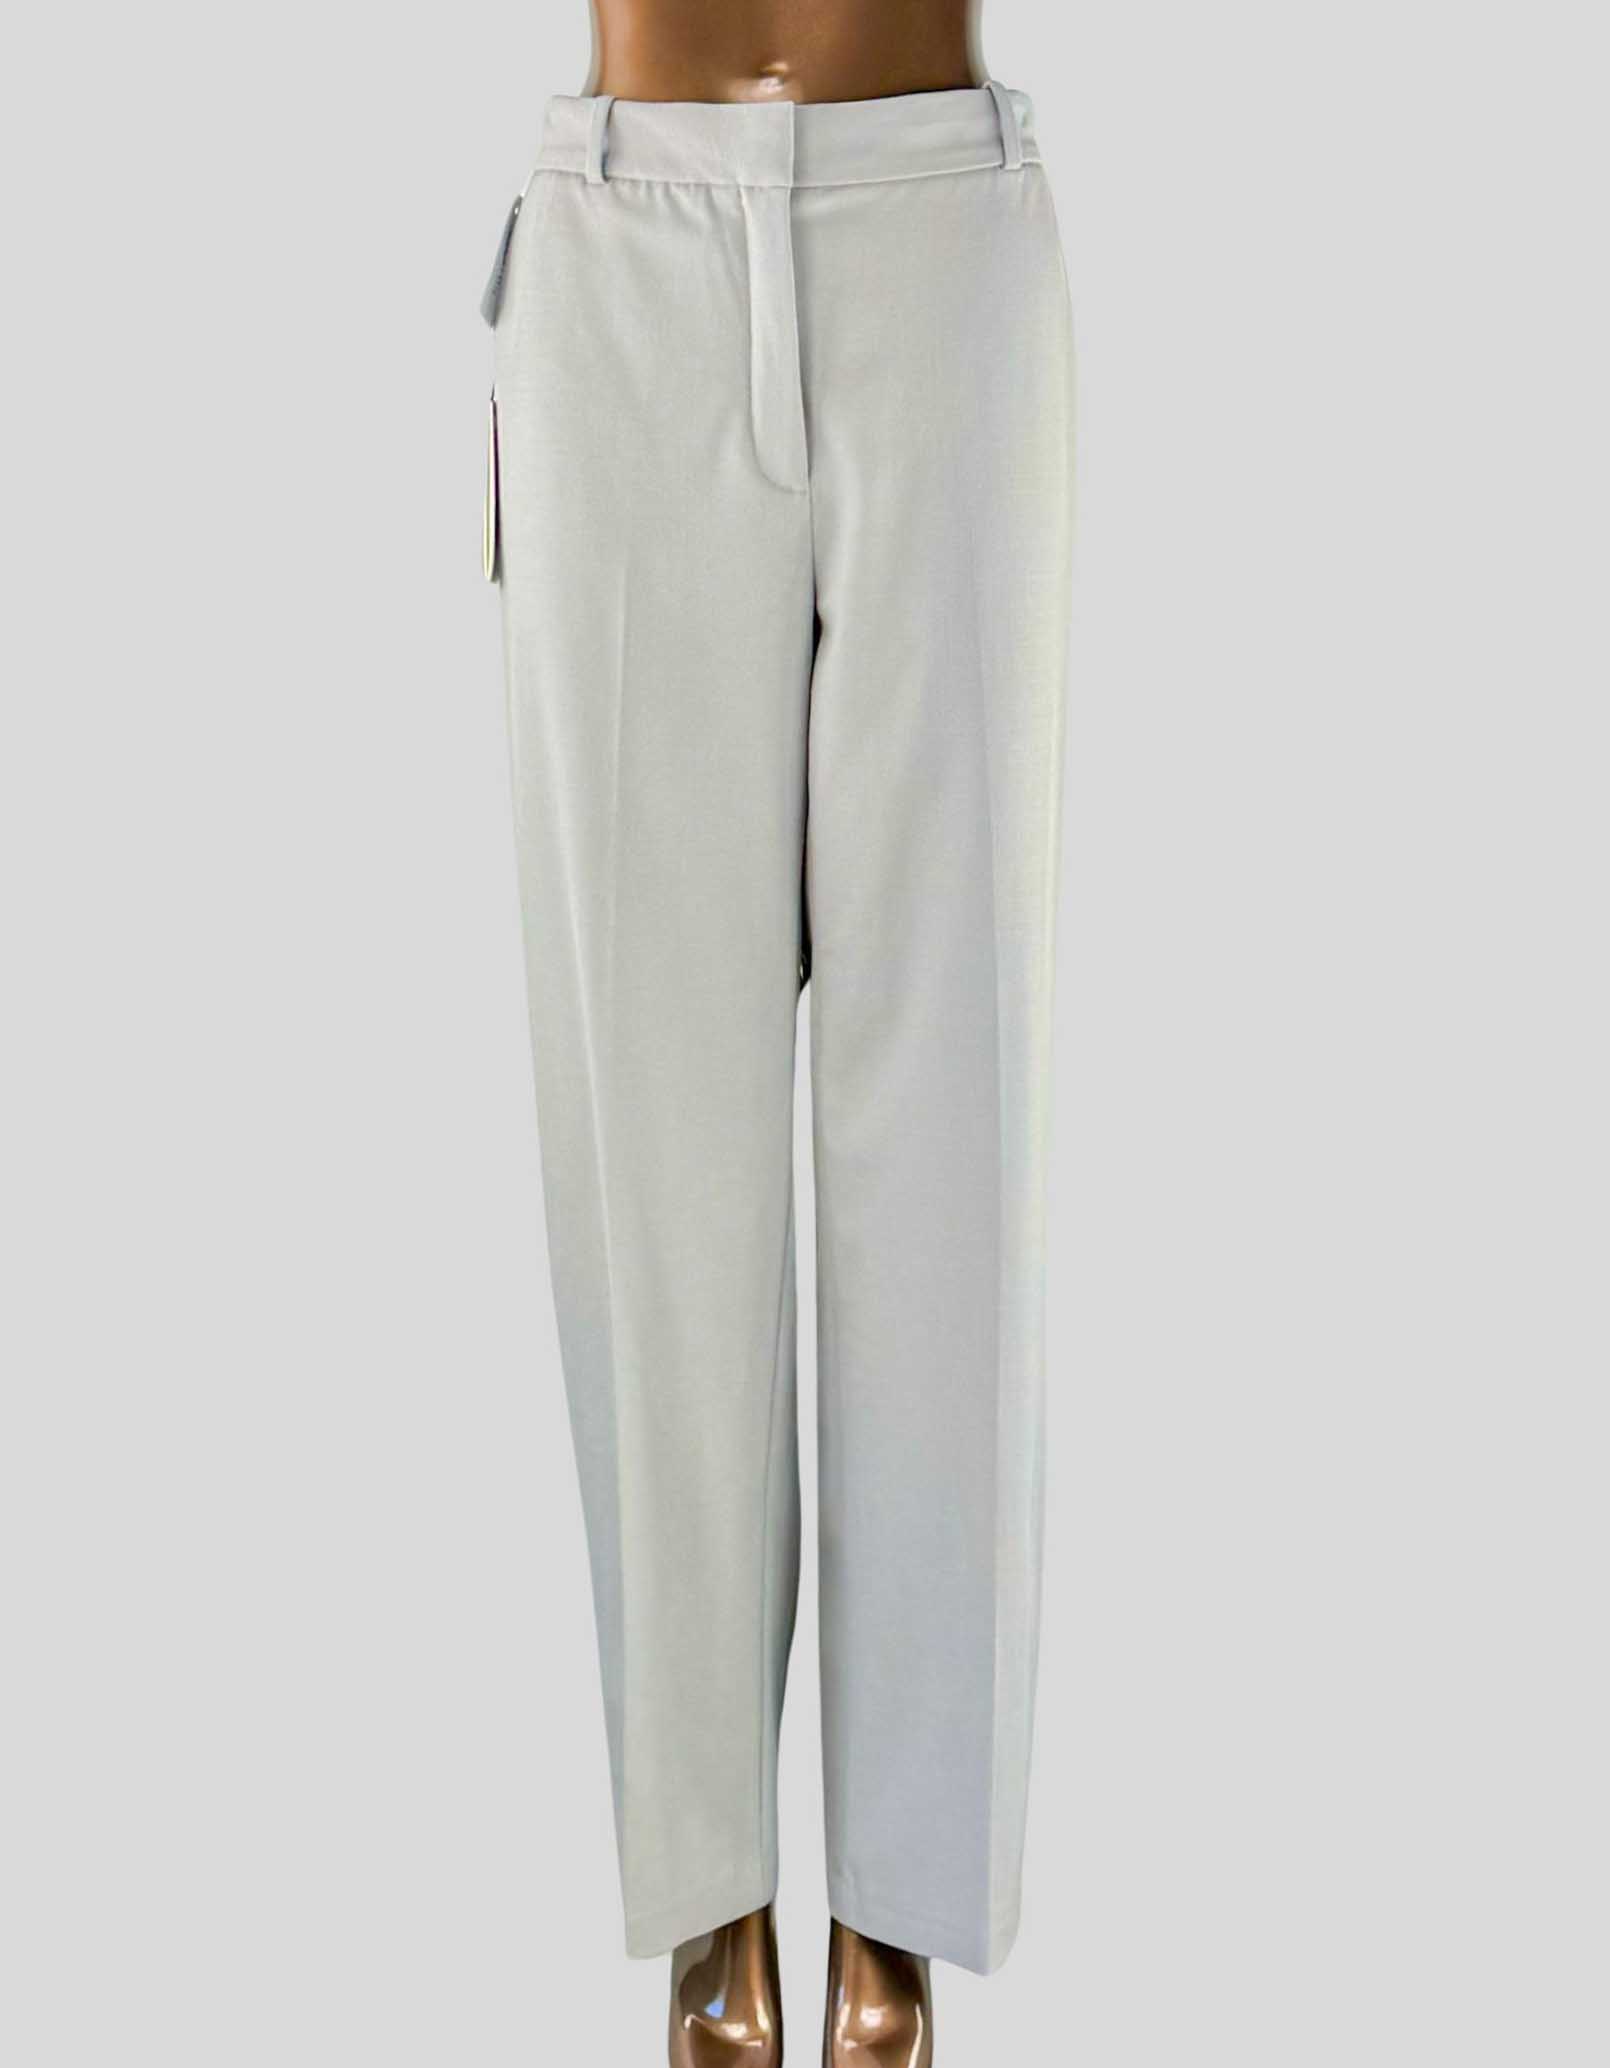 BABATON high-waisted trousers